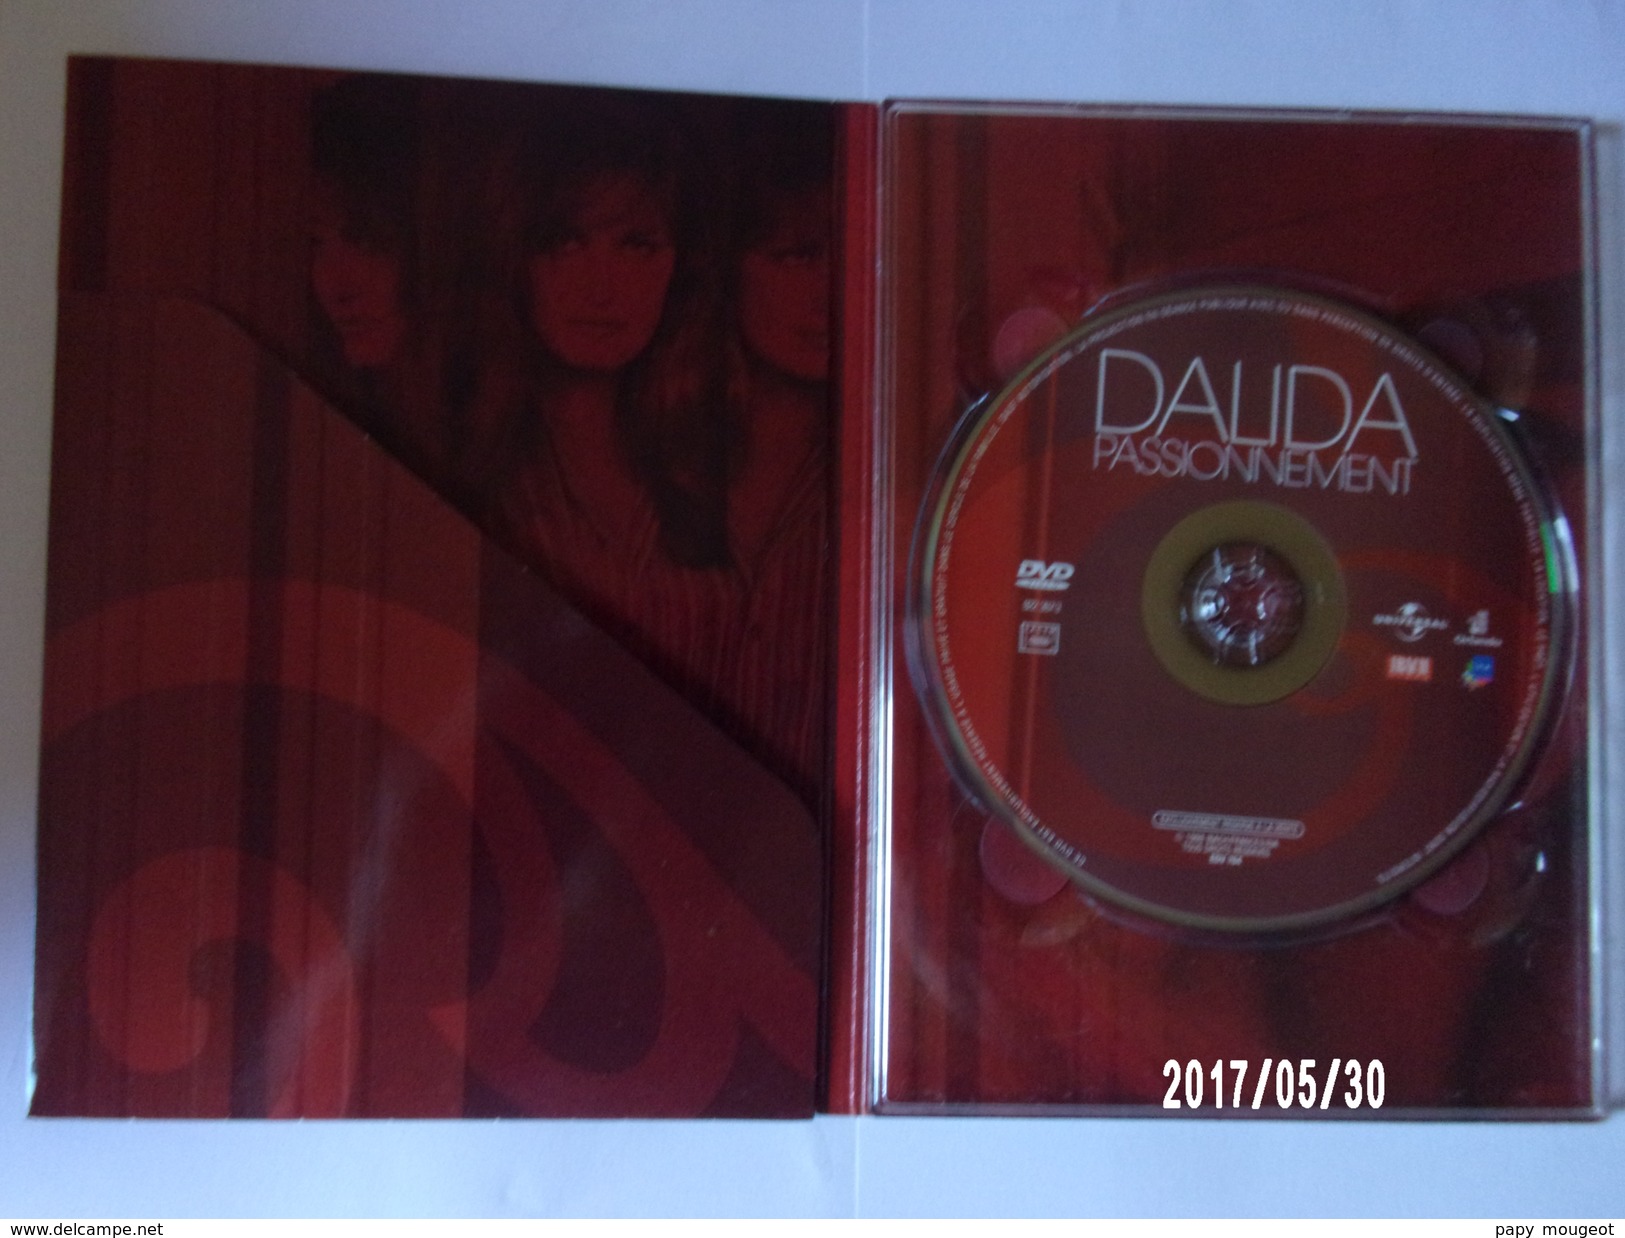 Dalida Passionnement - DVD Musicaux